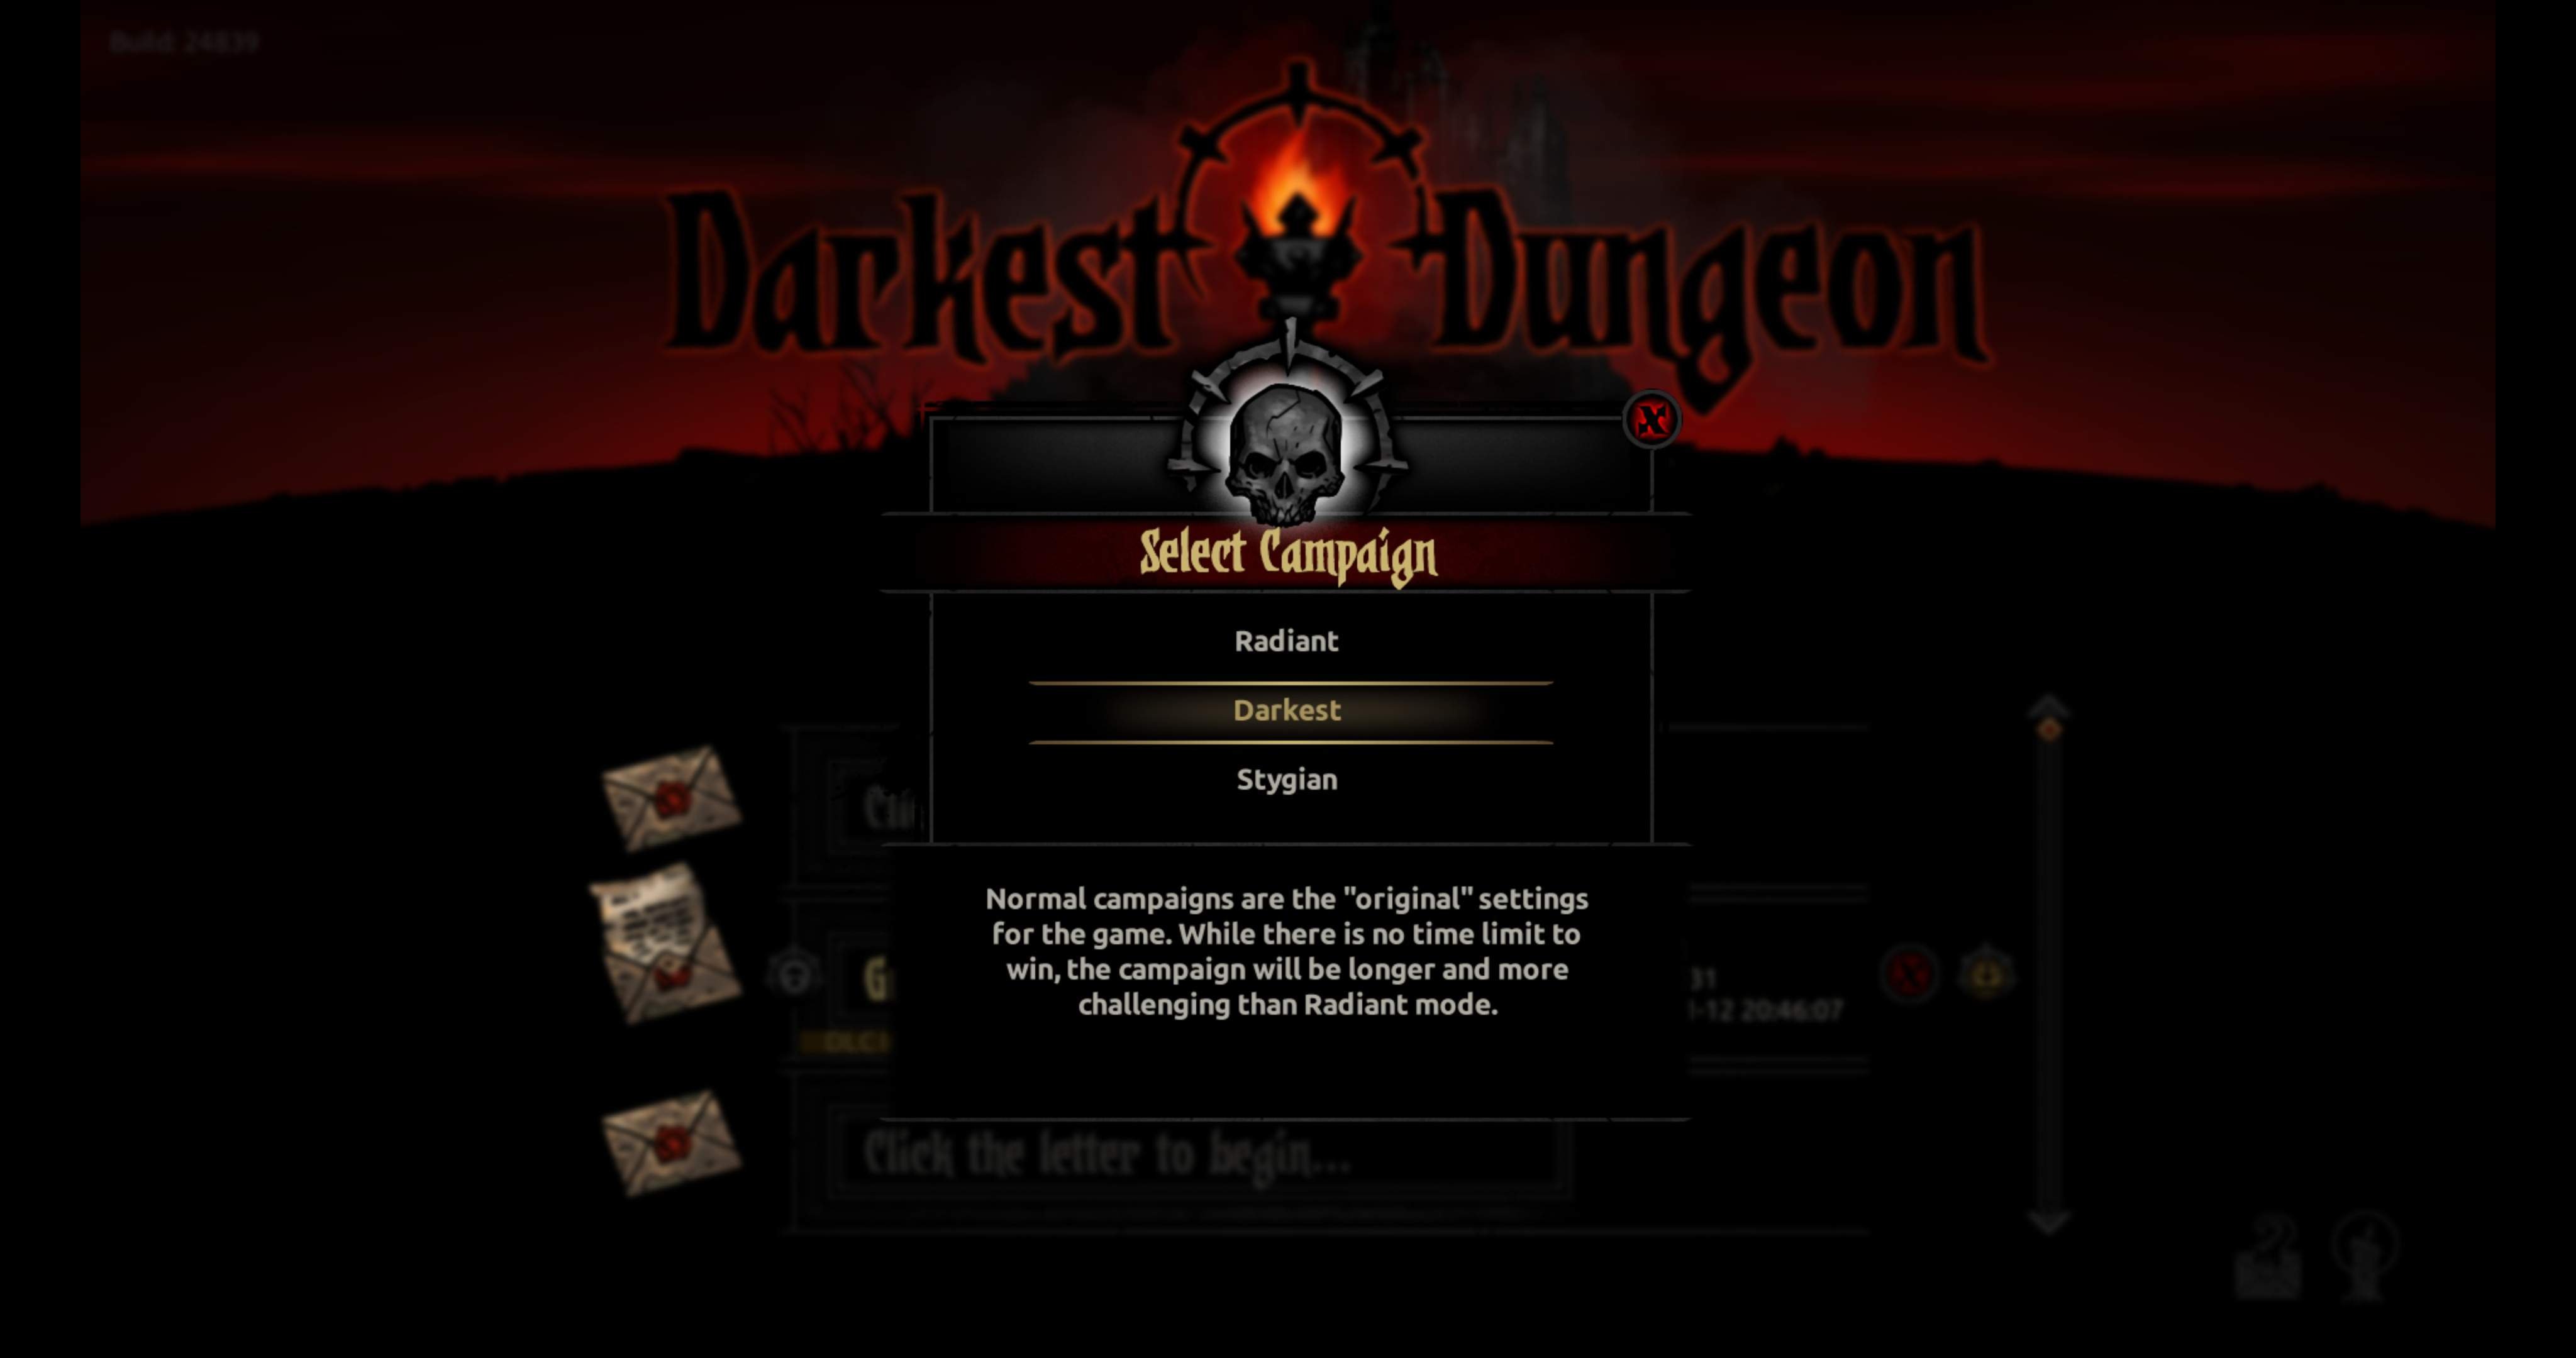 darkest dungeon party combo